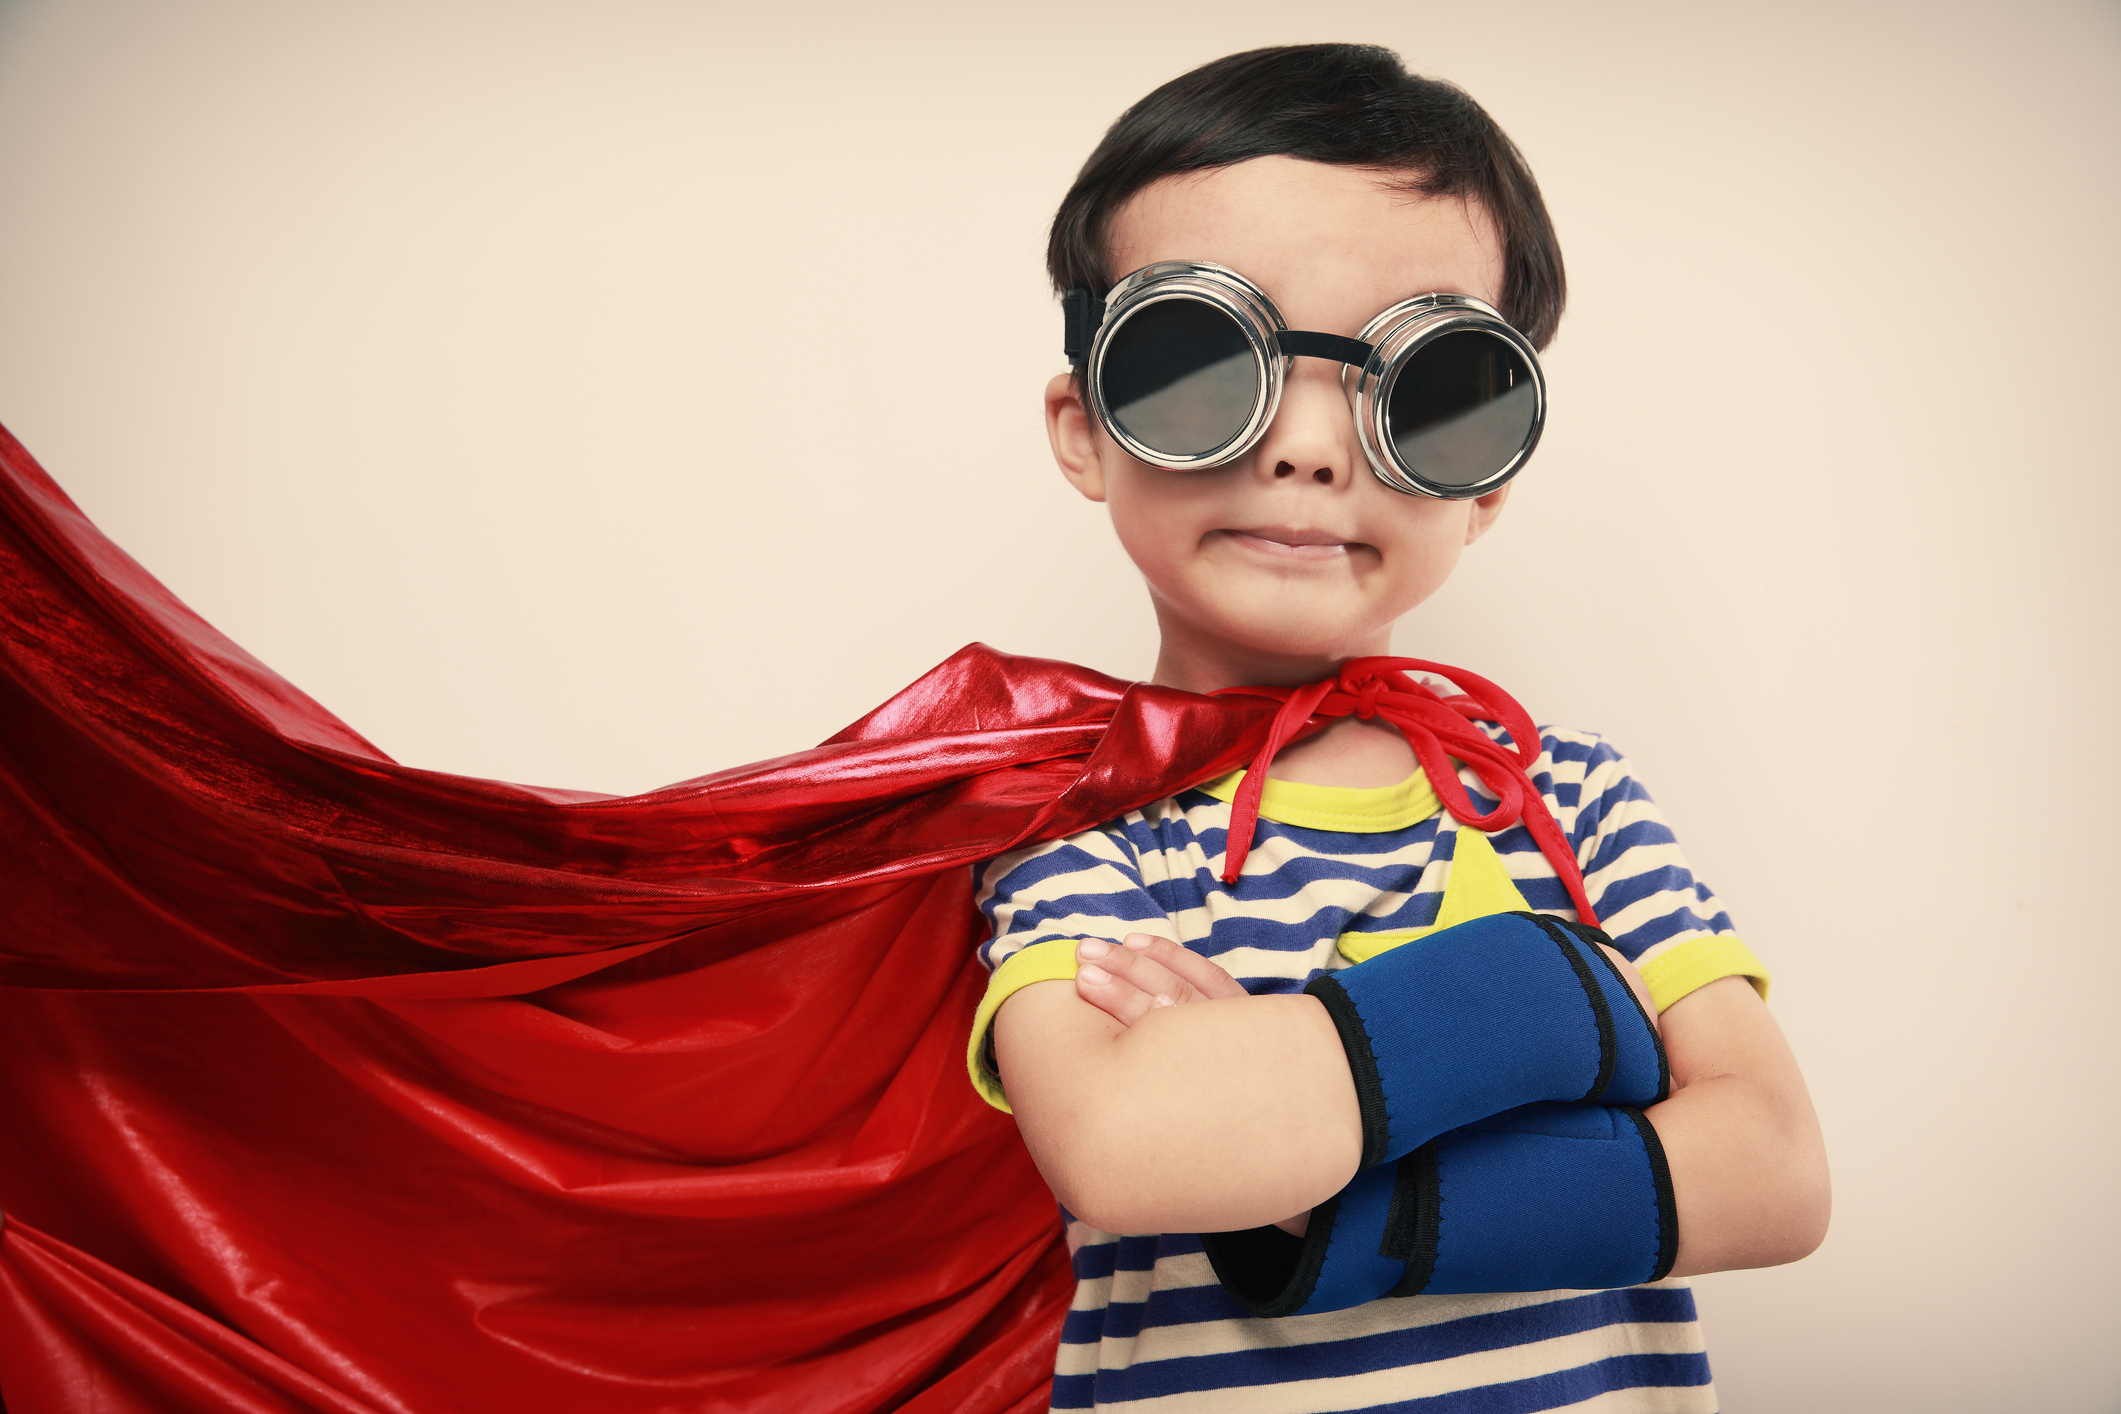 A little boy dressed as a superhero